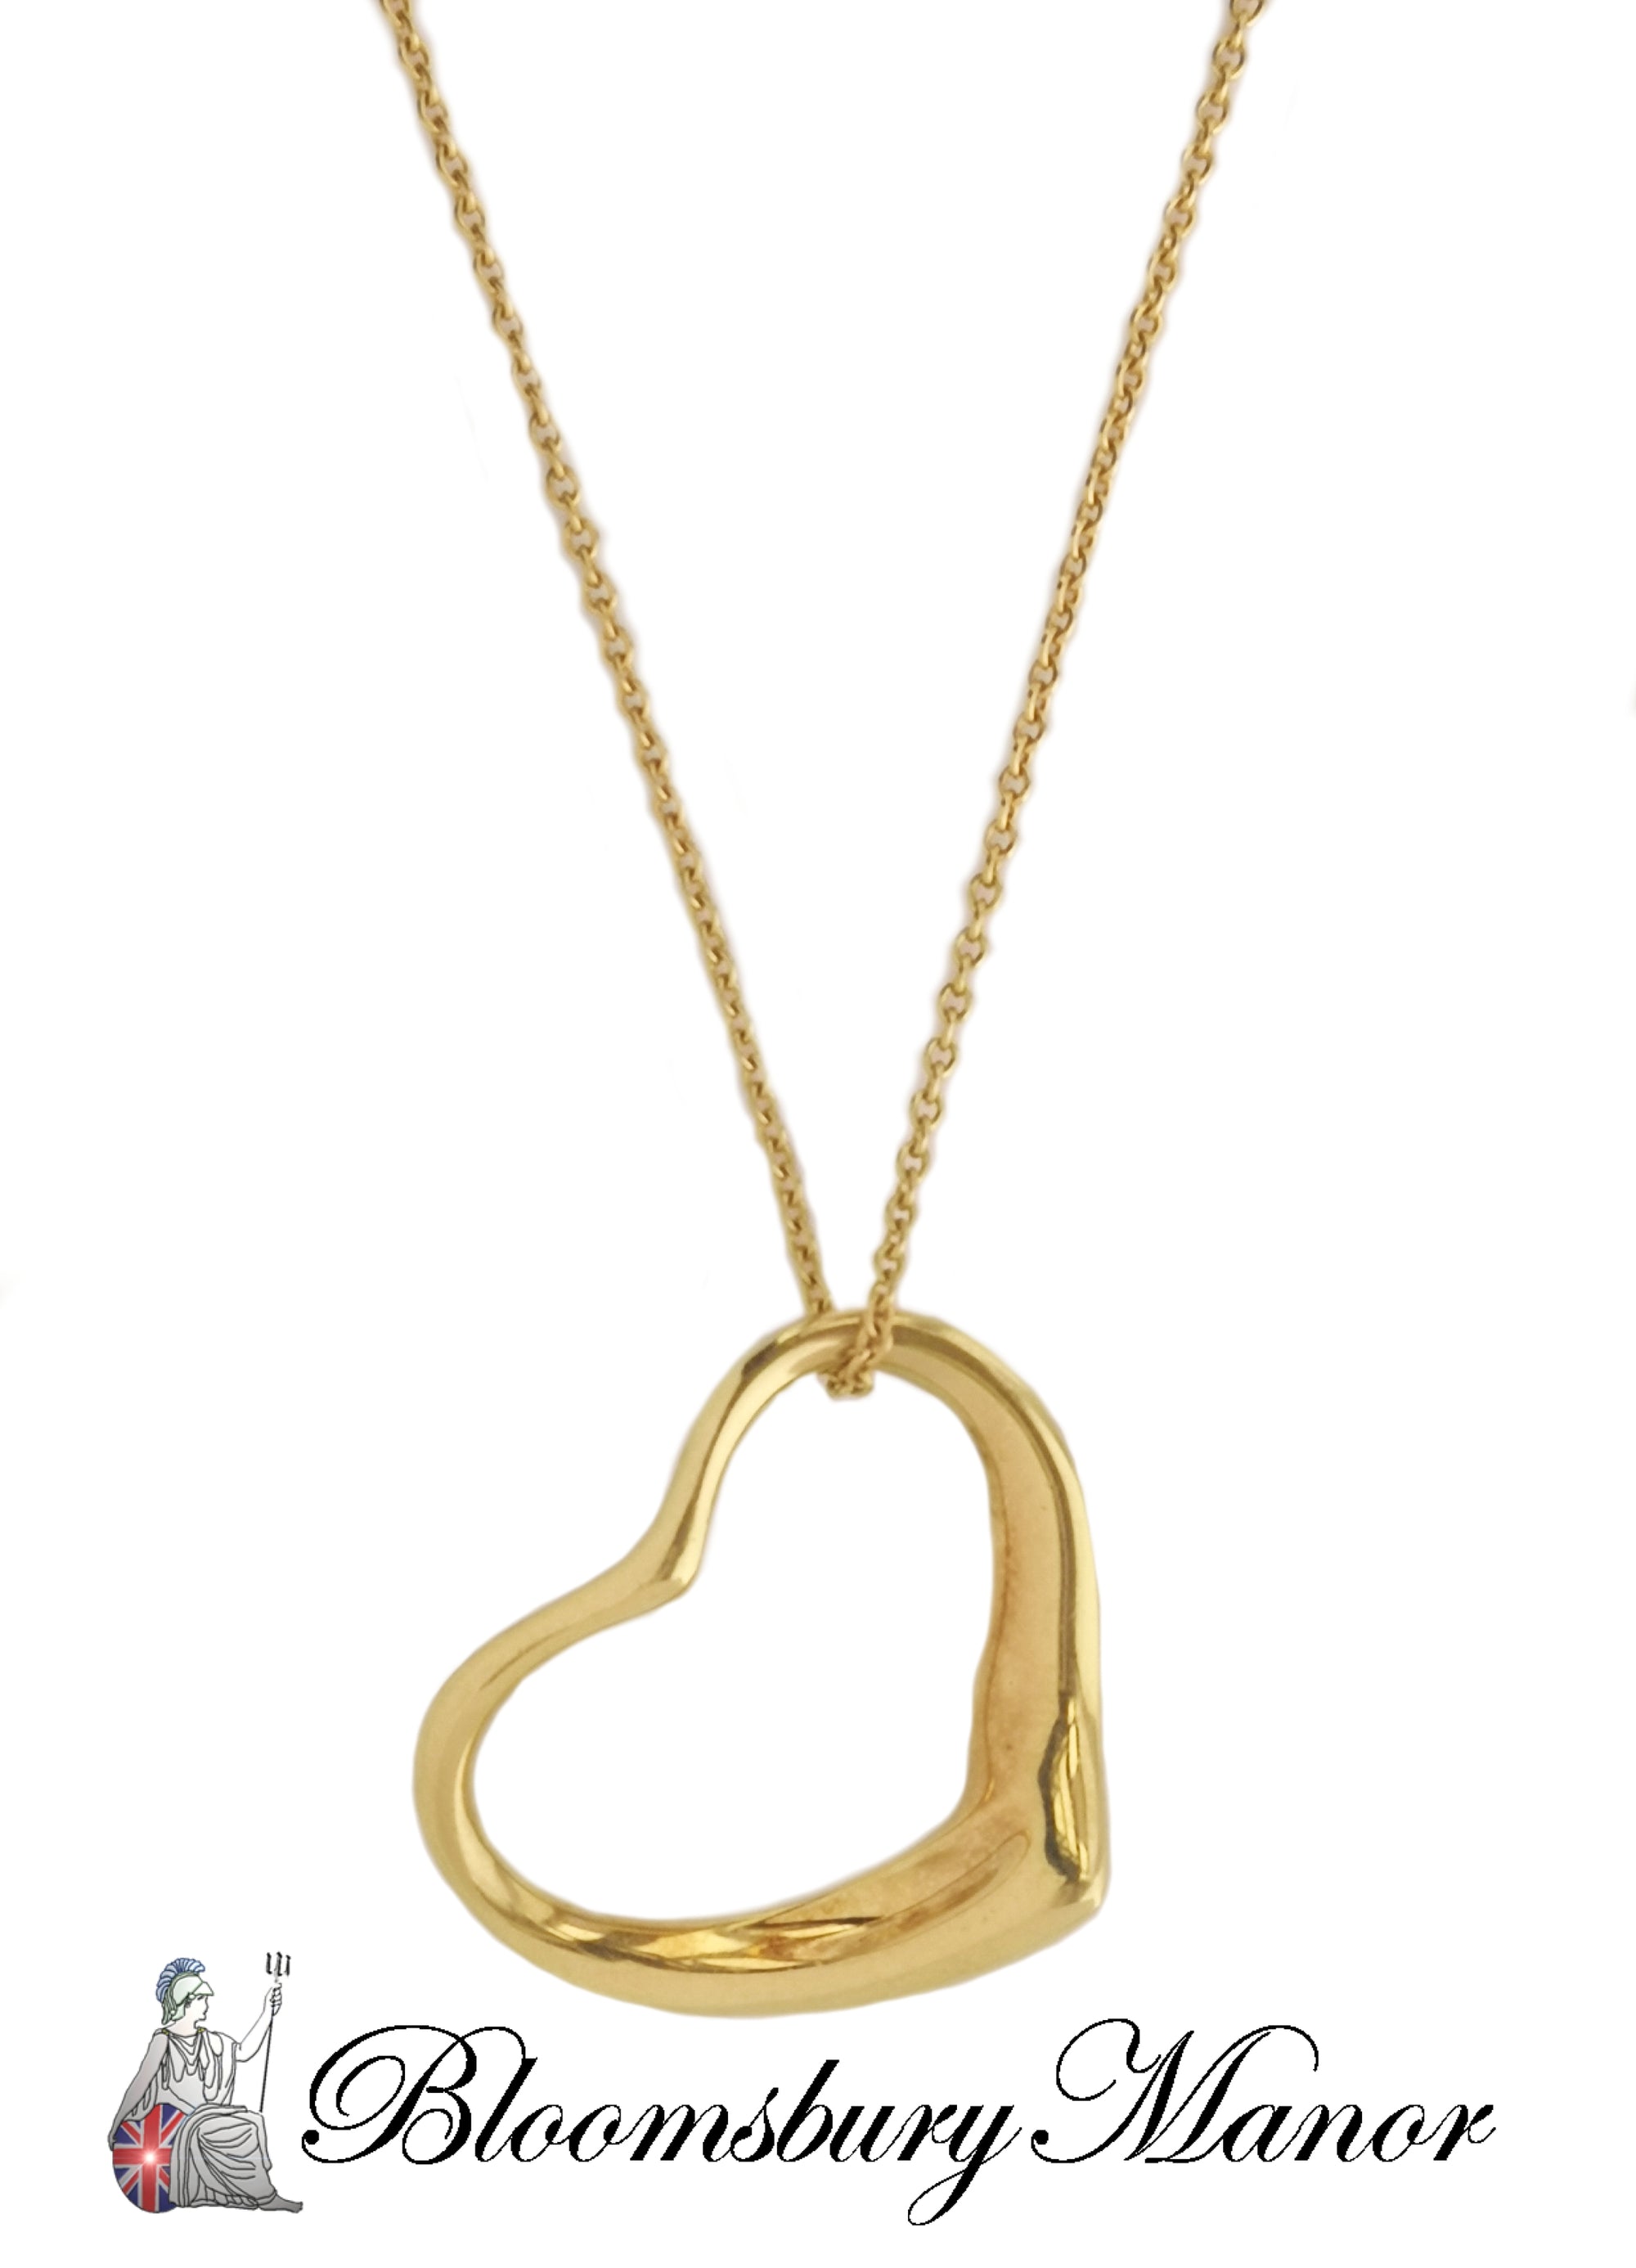 Tiffany & Co 21mm Large Elsa Peretti Open Heart Yellow Gold  Pendant Necklace 16"